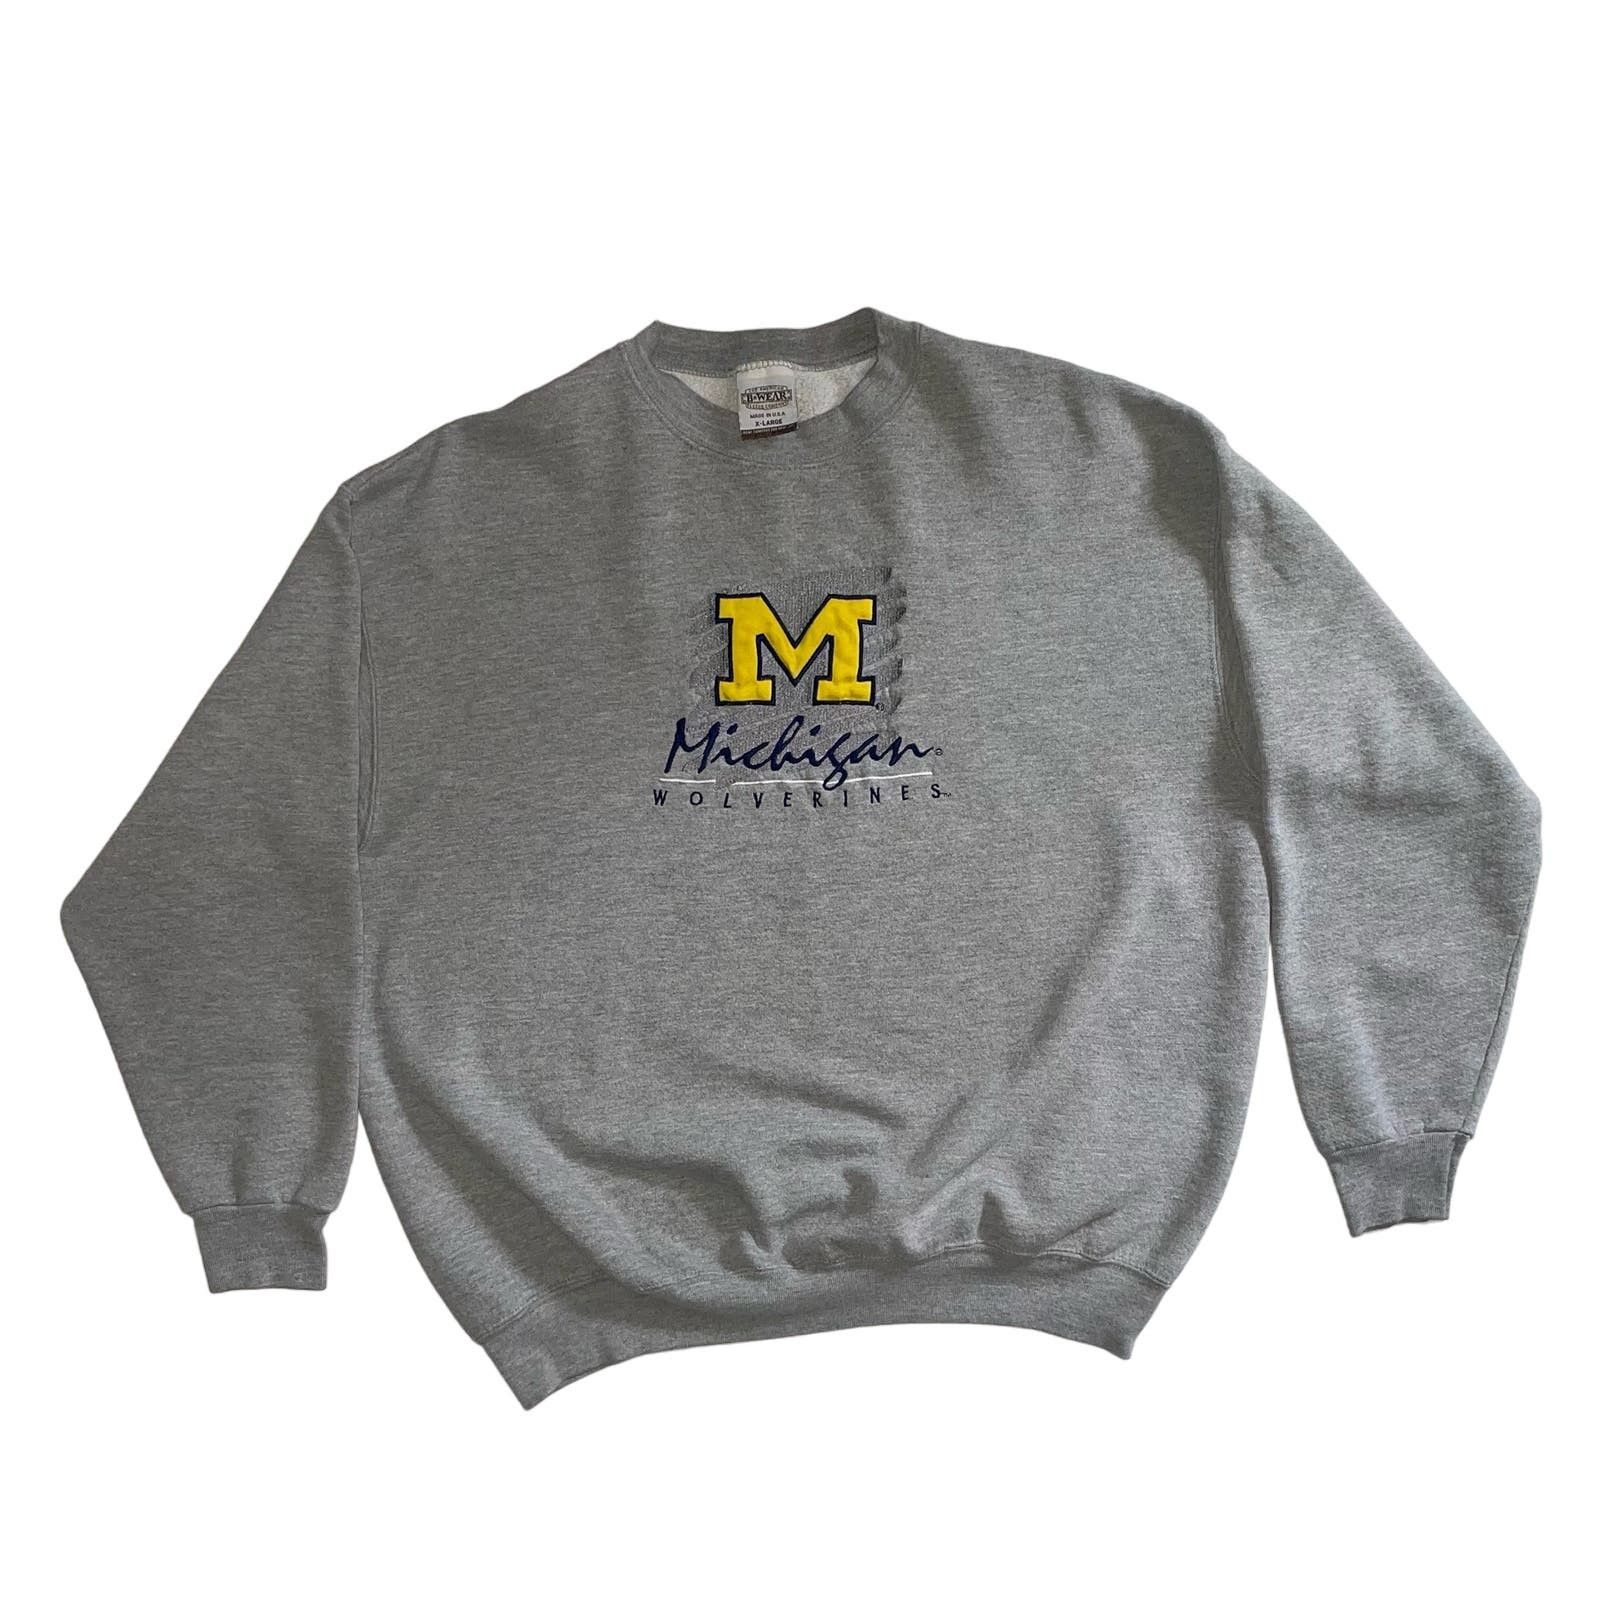 Vintage 90s University of Michigan Wolverines Crewneck Sweatshirt